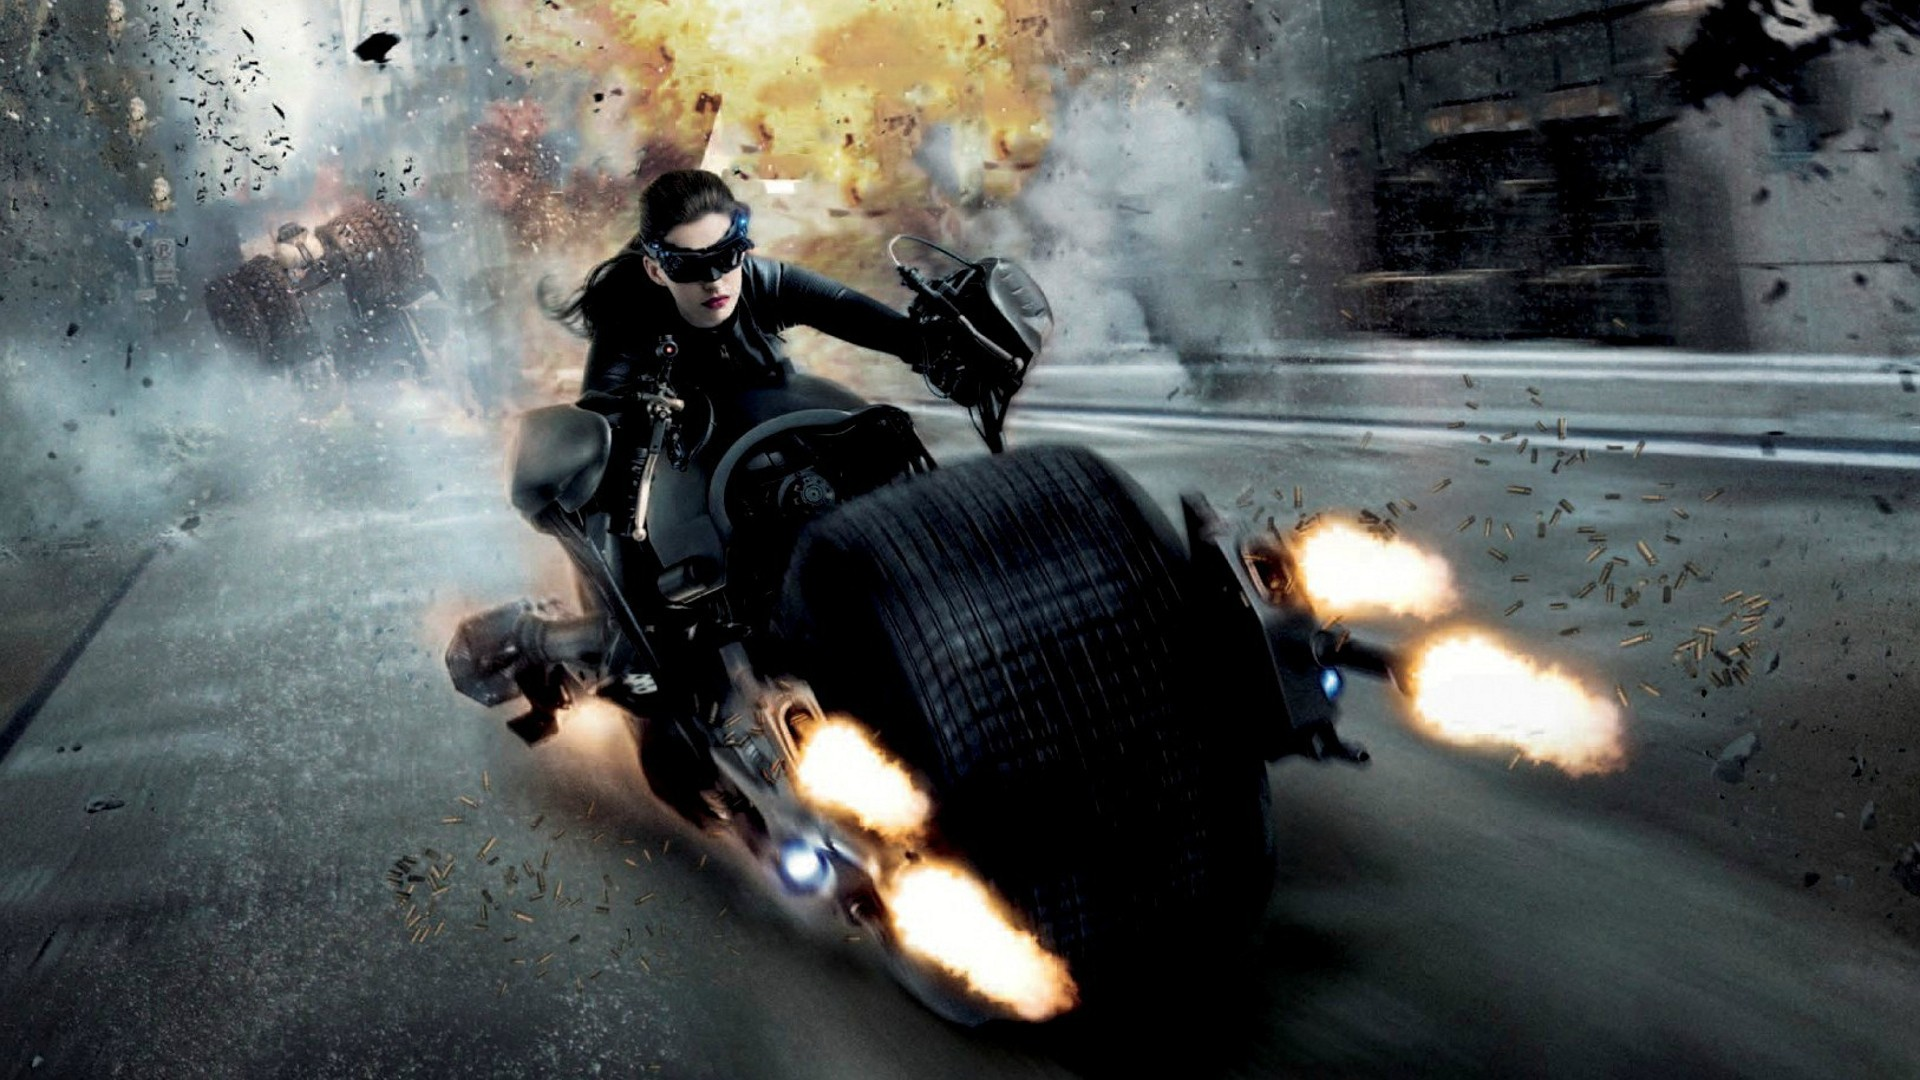 Download Batman Bike Wallpaper Free Download - Batman Car And Bike , HD Wallpaper & Backgrounds